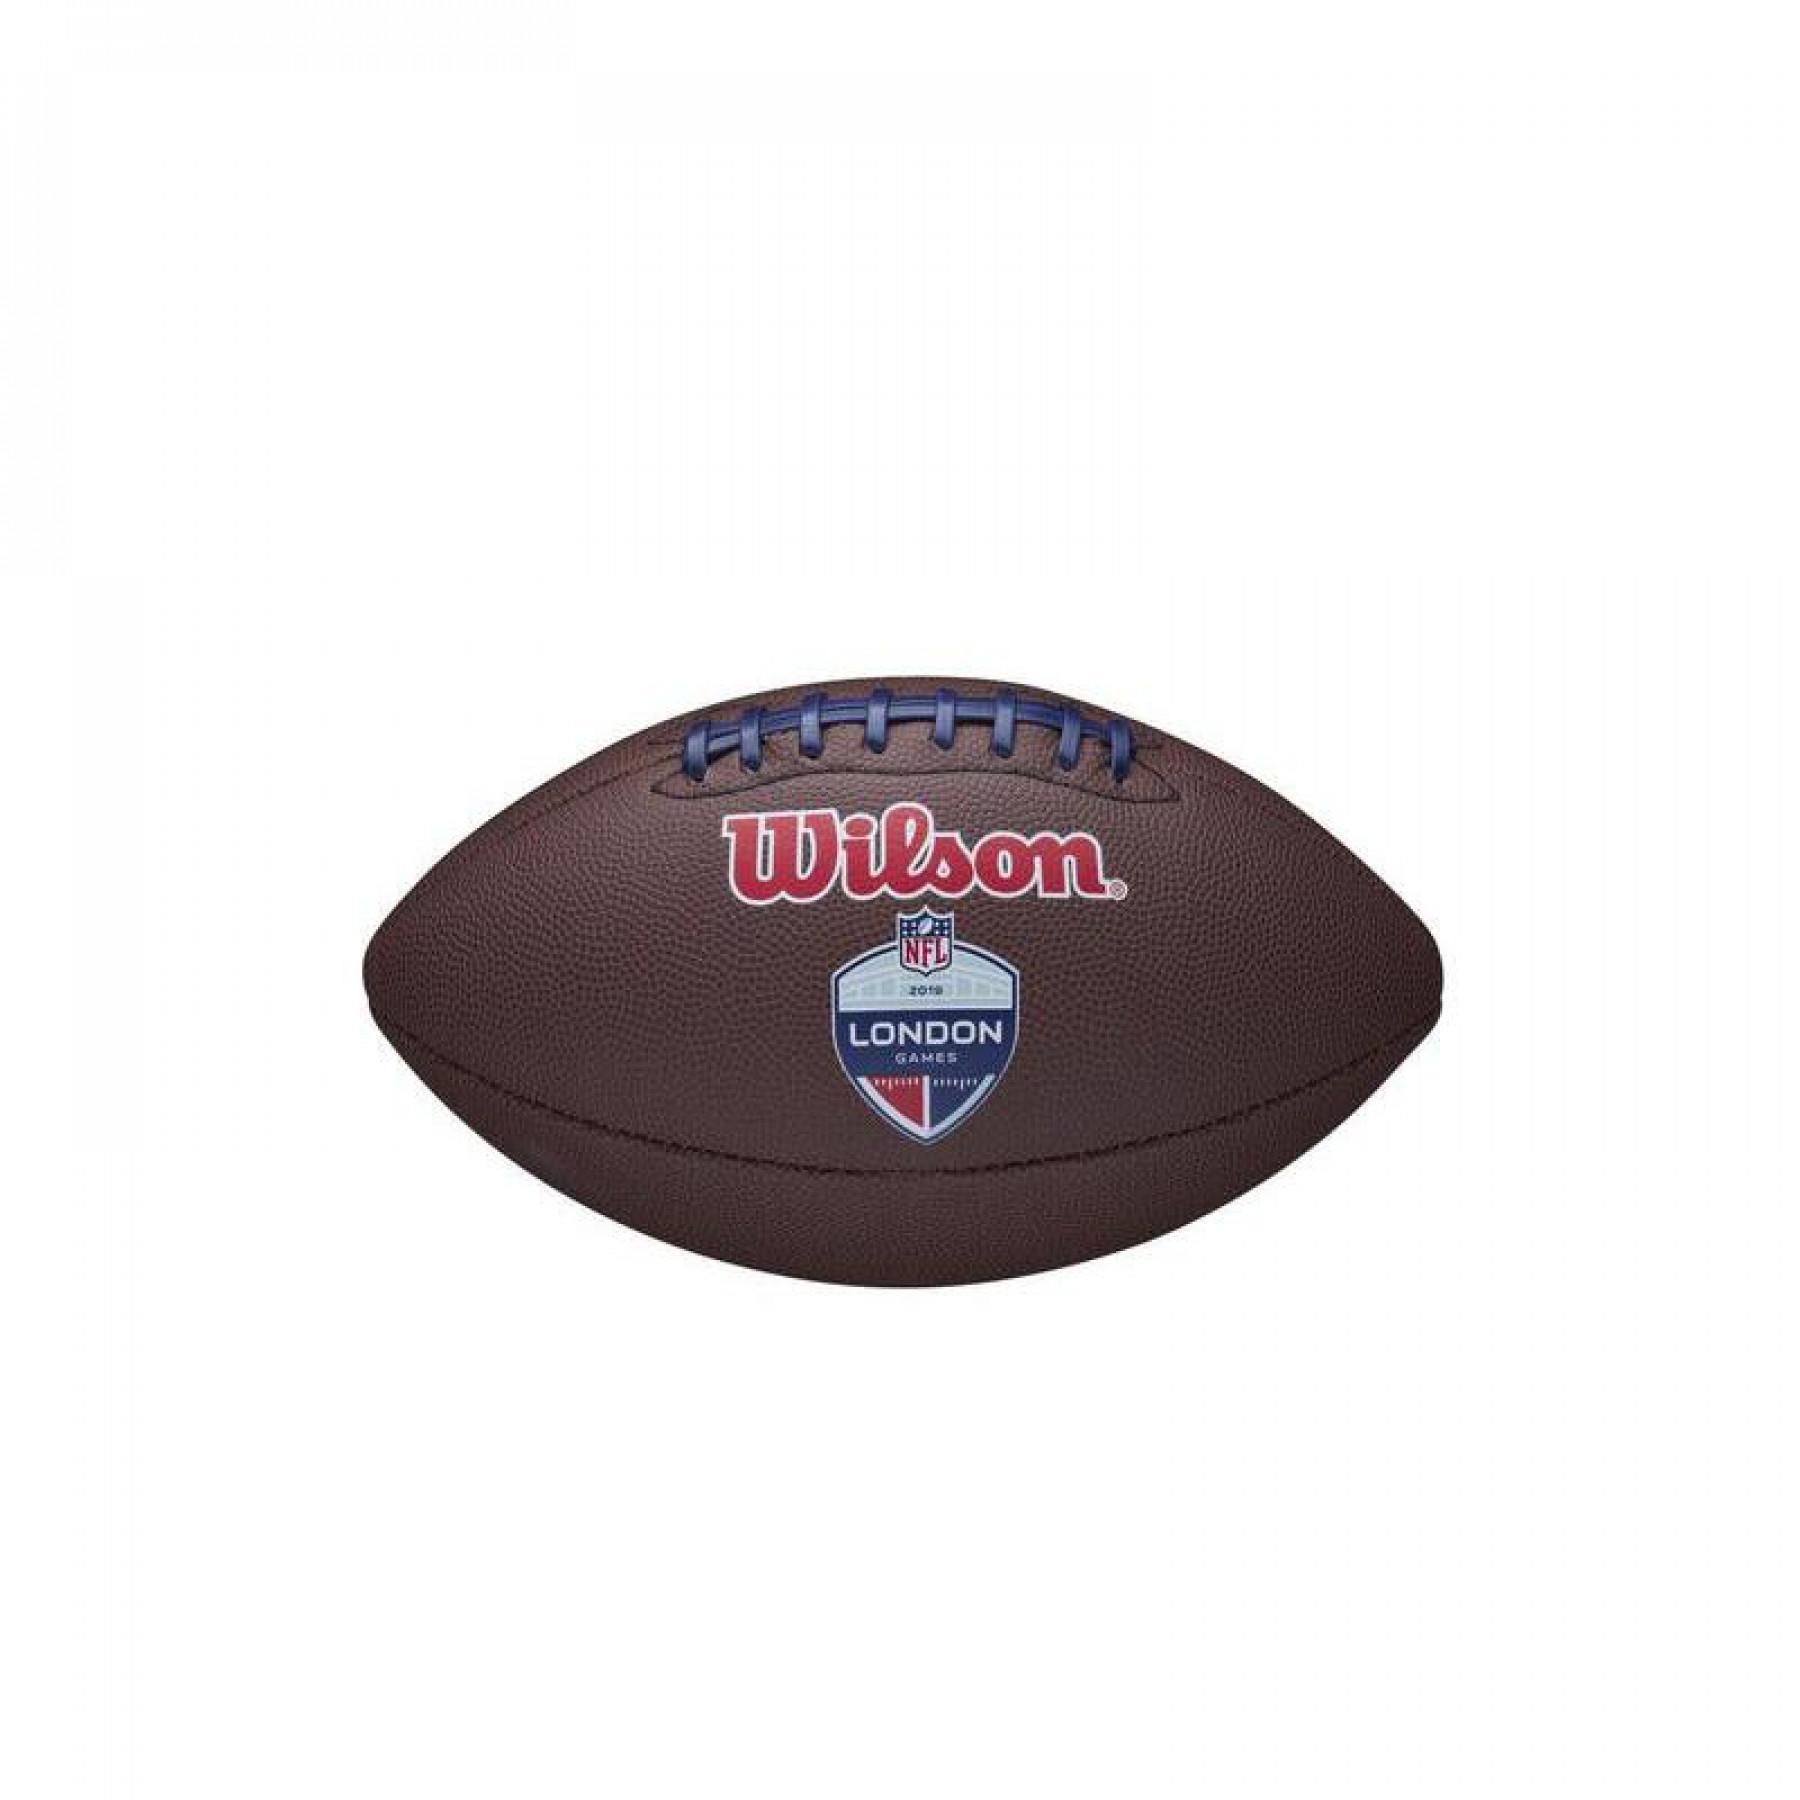 Balloon NFL London Games Replica